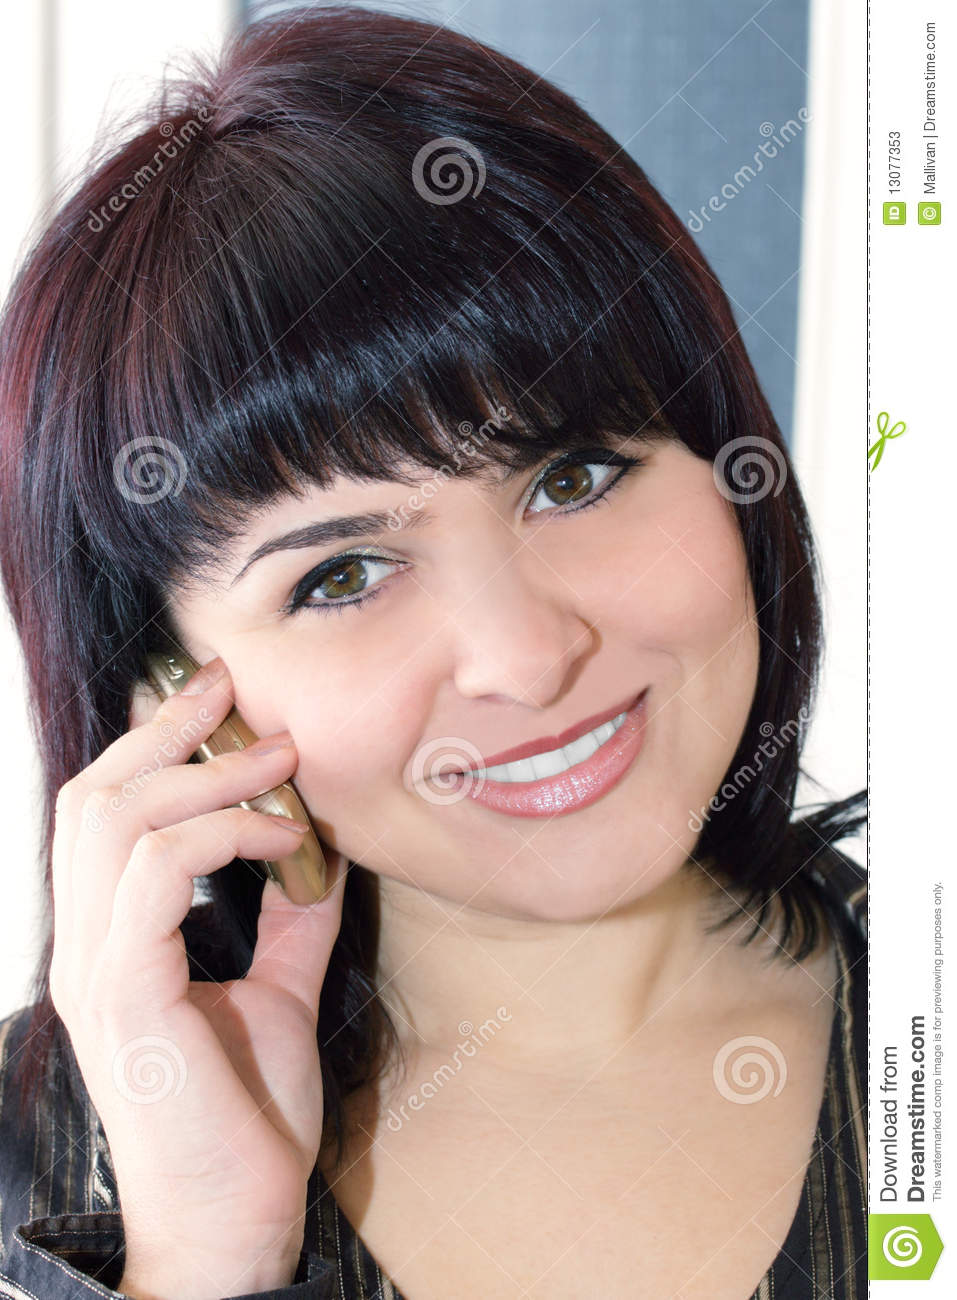 Lady Talking On Mobile Phone Stock Photos   Image  13077353